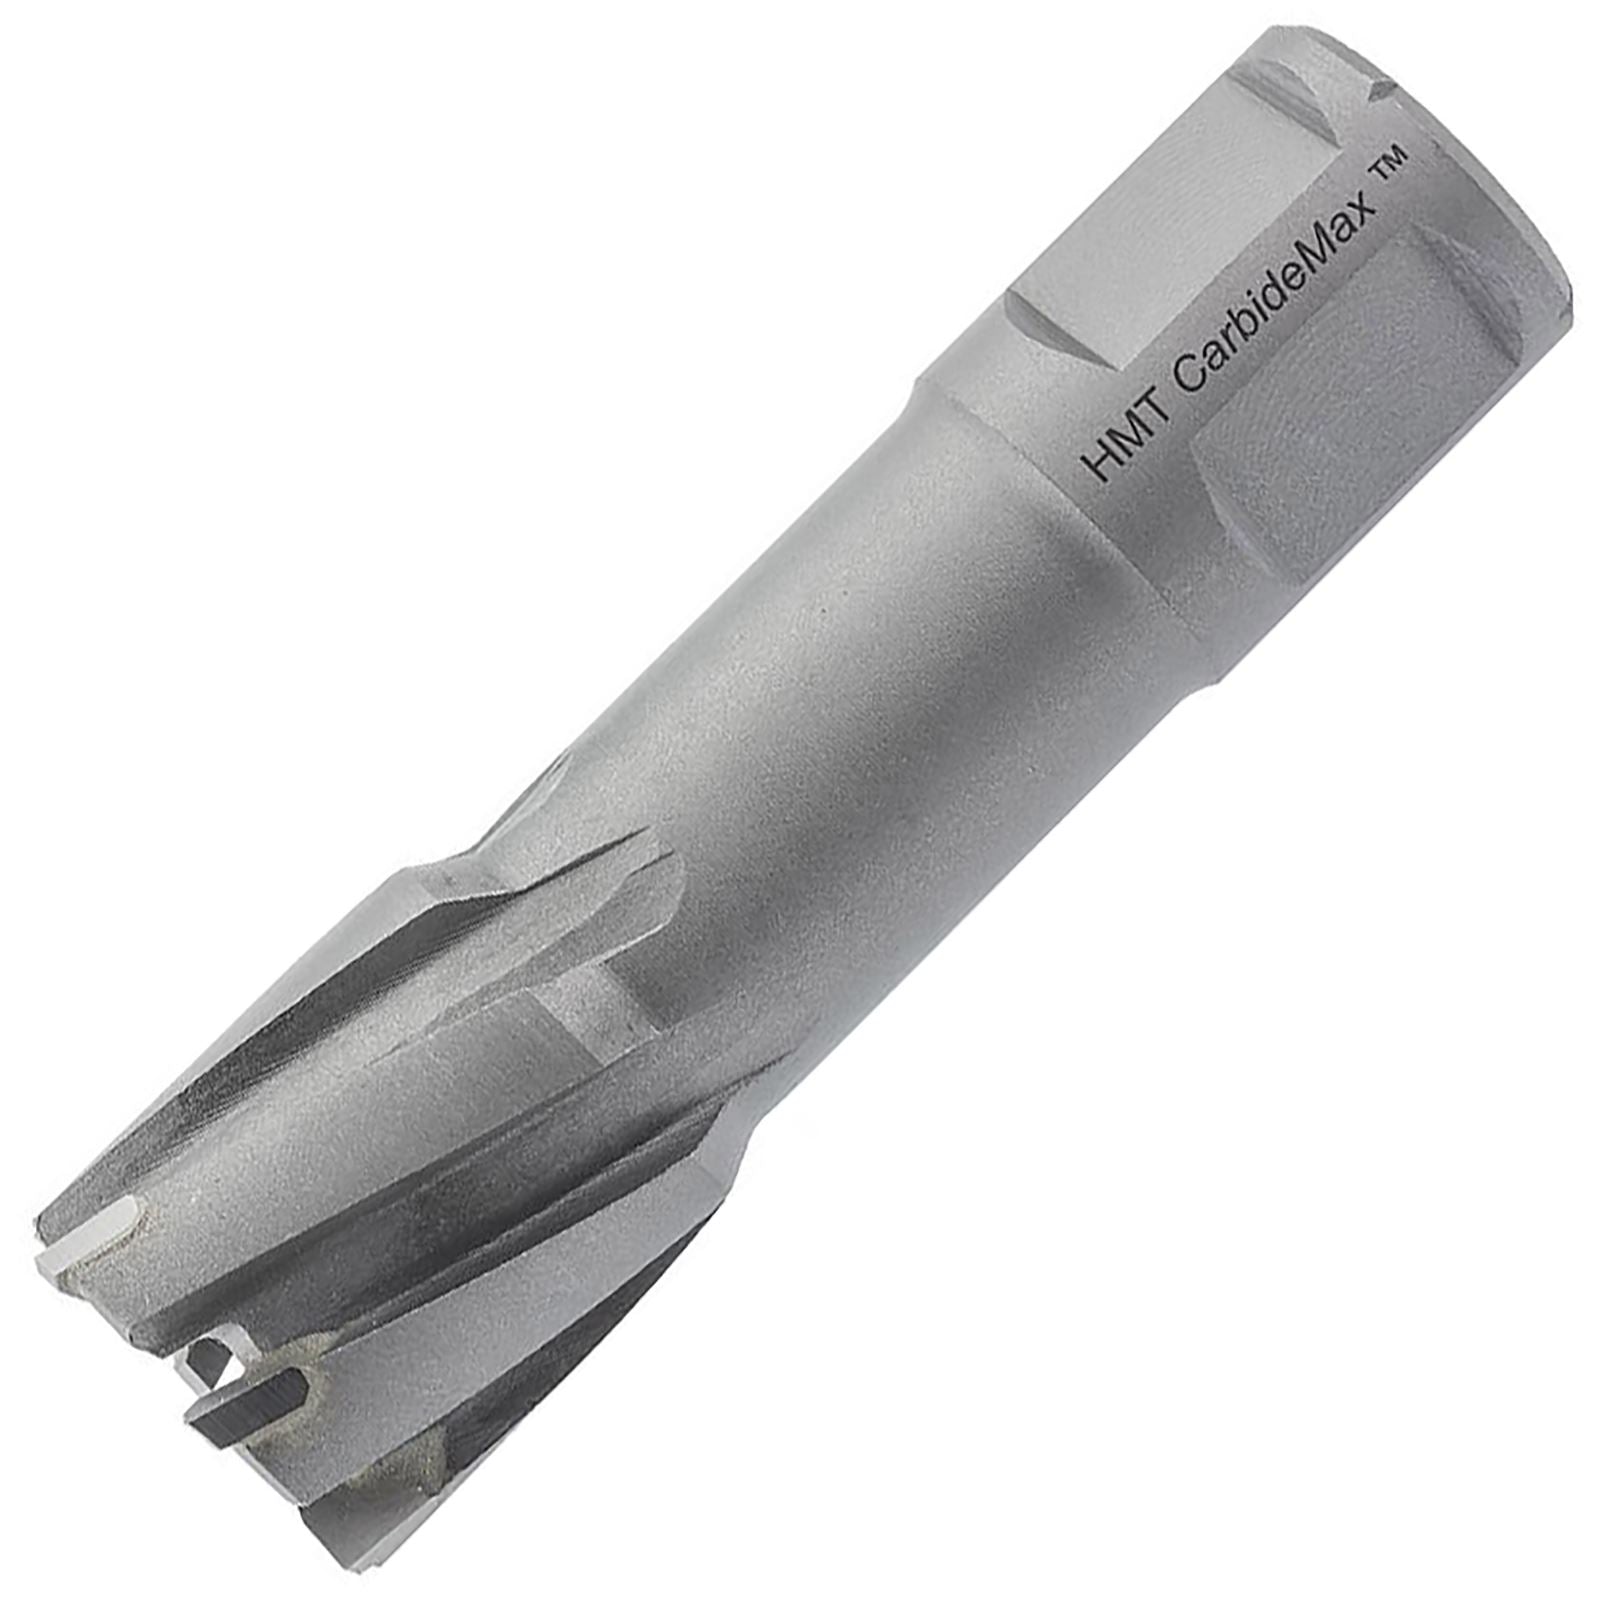 HoleMaker Technology CarbideMax 40mm TCT Magnet Broach Cutters for Mag Drill